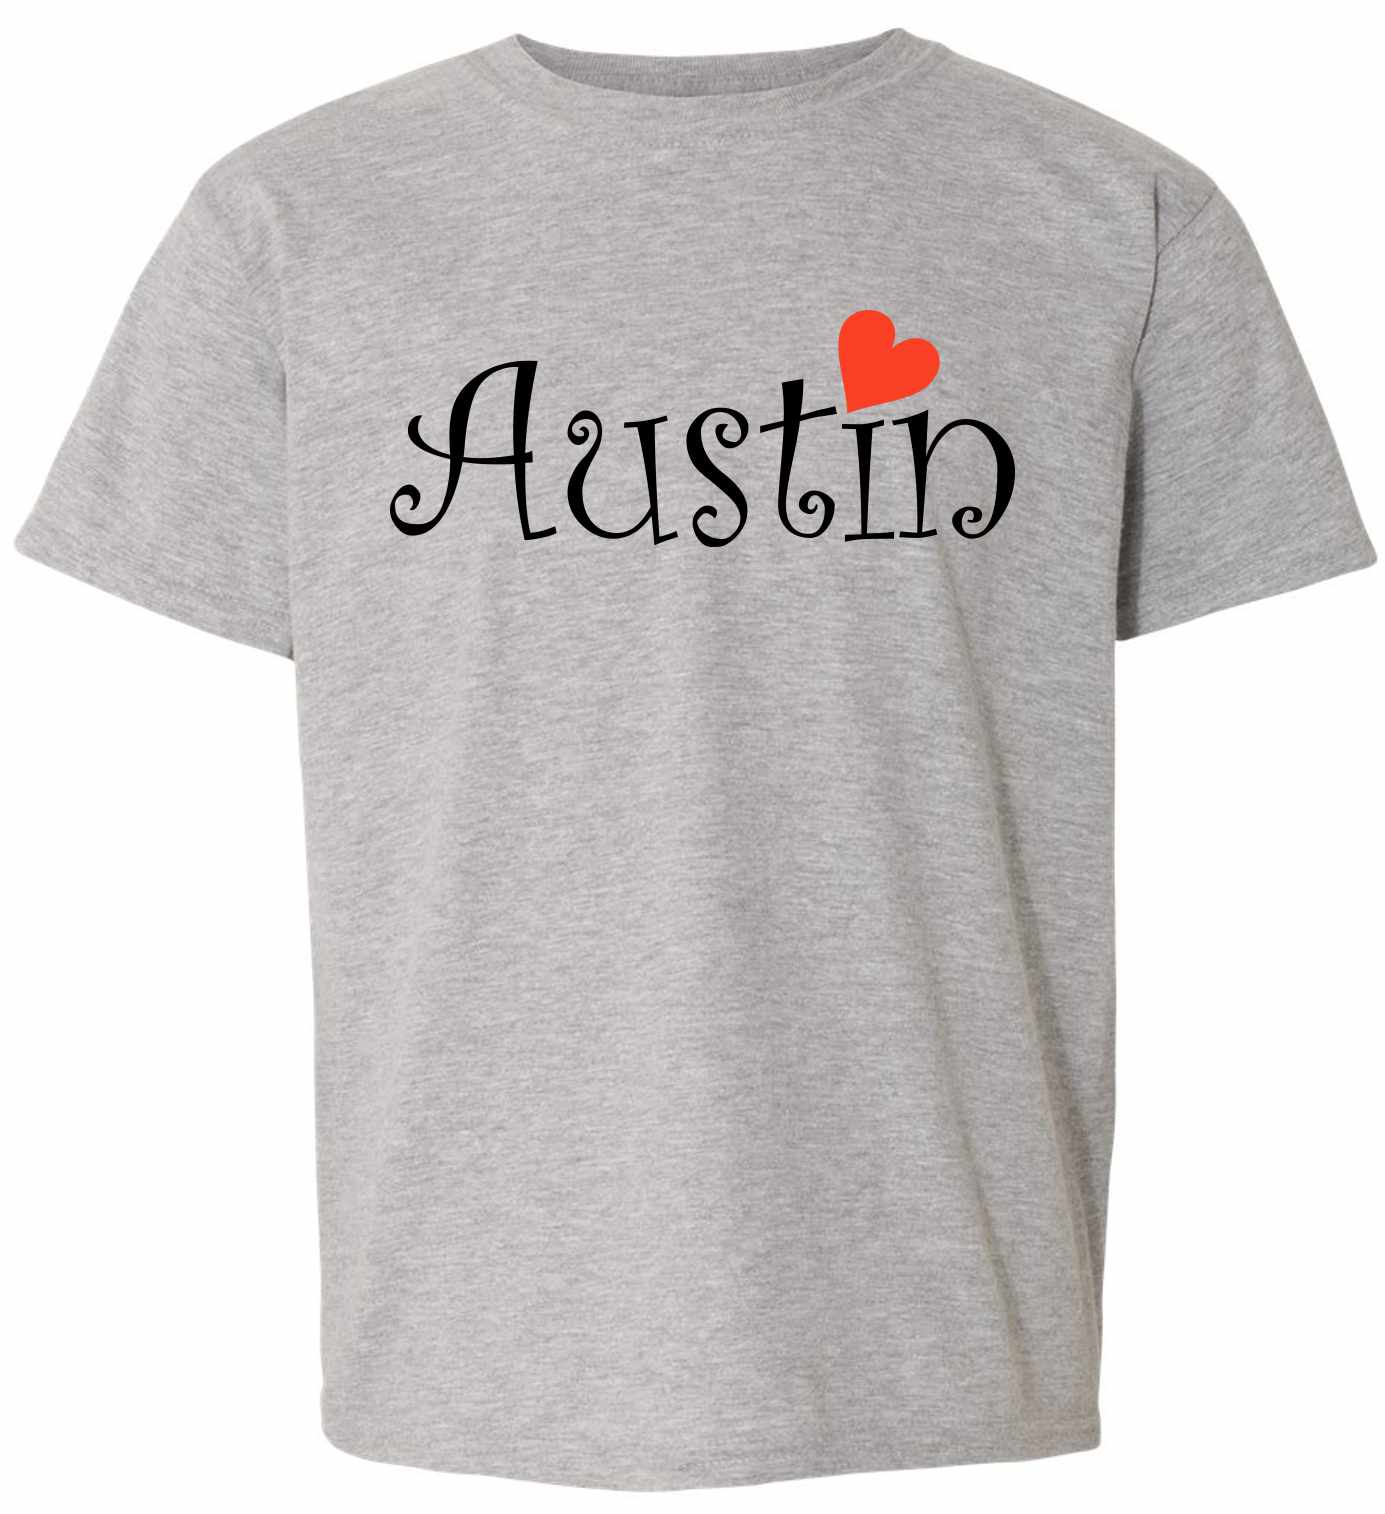 Austin City on Kids T-Shirt (#1338-201)